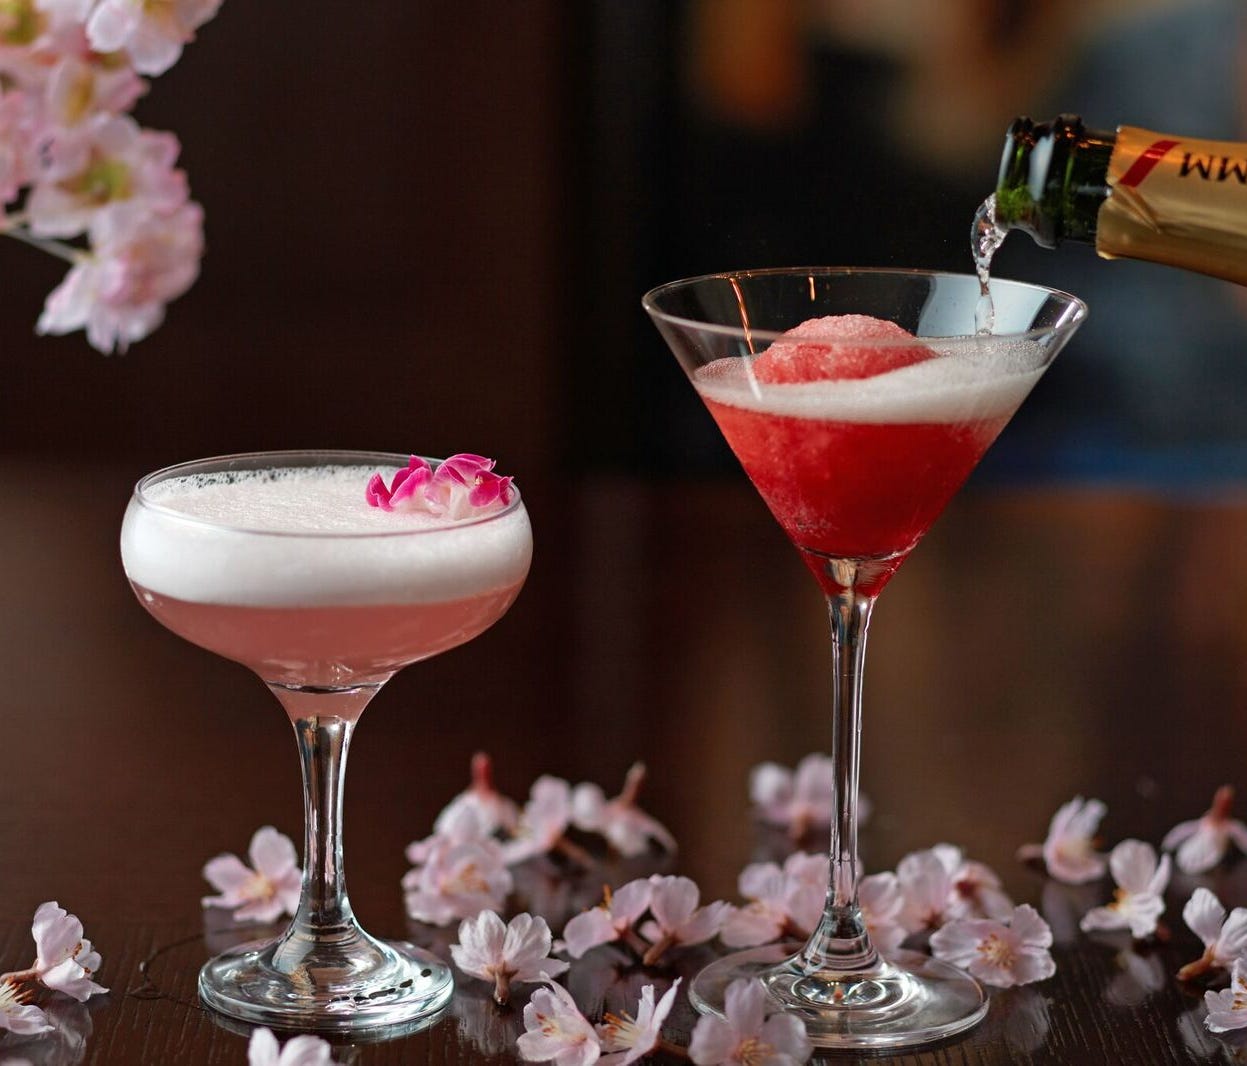 Also at Grand Hyatt Tokyo,  The Oak Door Bar will offer the Sakura cocktail with ROKU Japanese gin, sakura liqueur and lychee juice (left), and Sakura Champagne Sorbet (right).